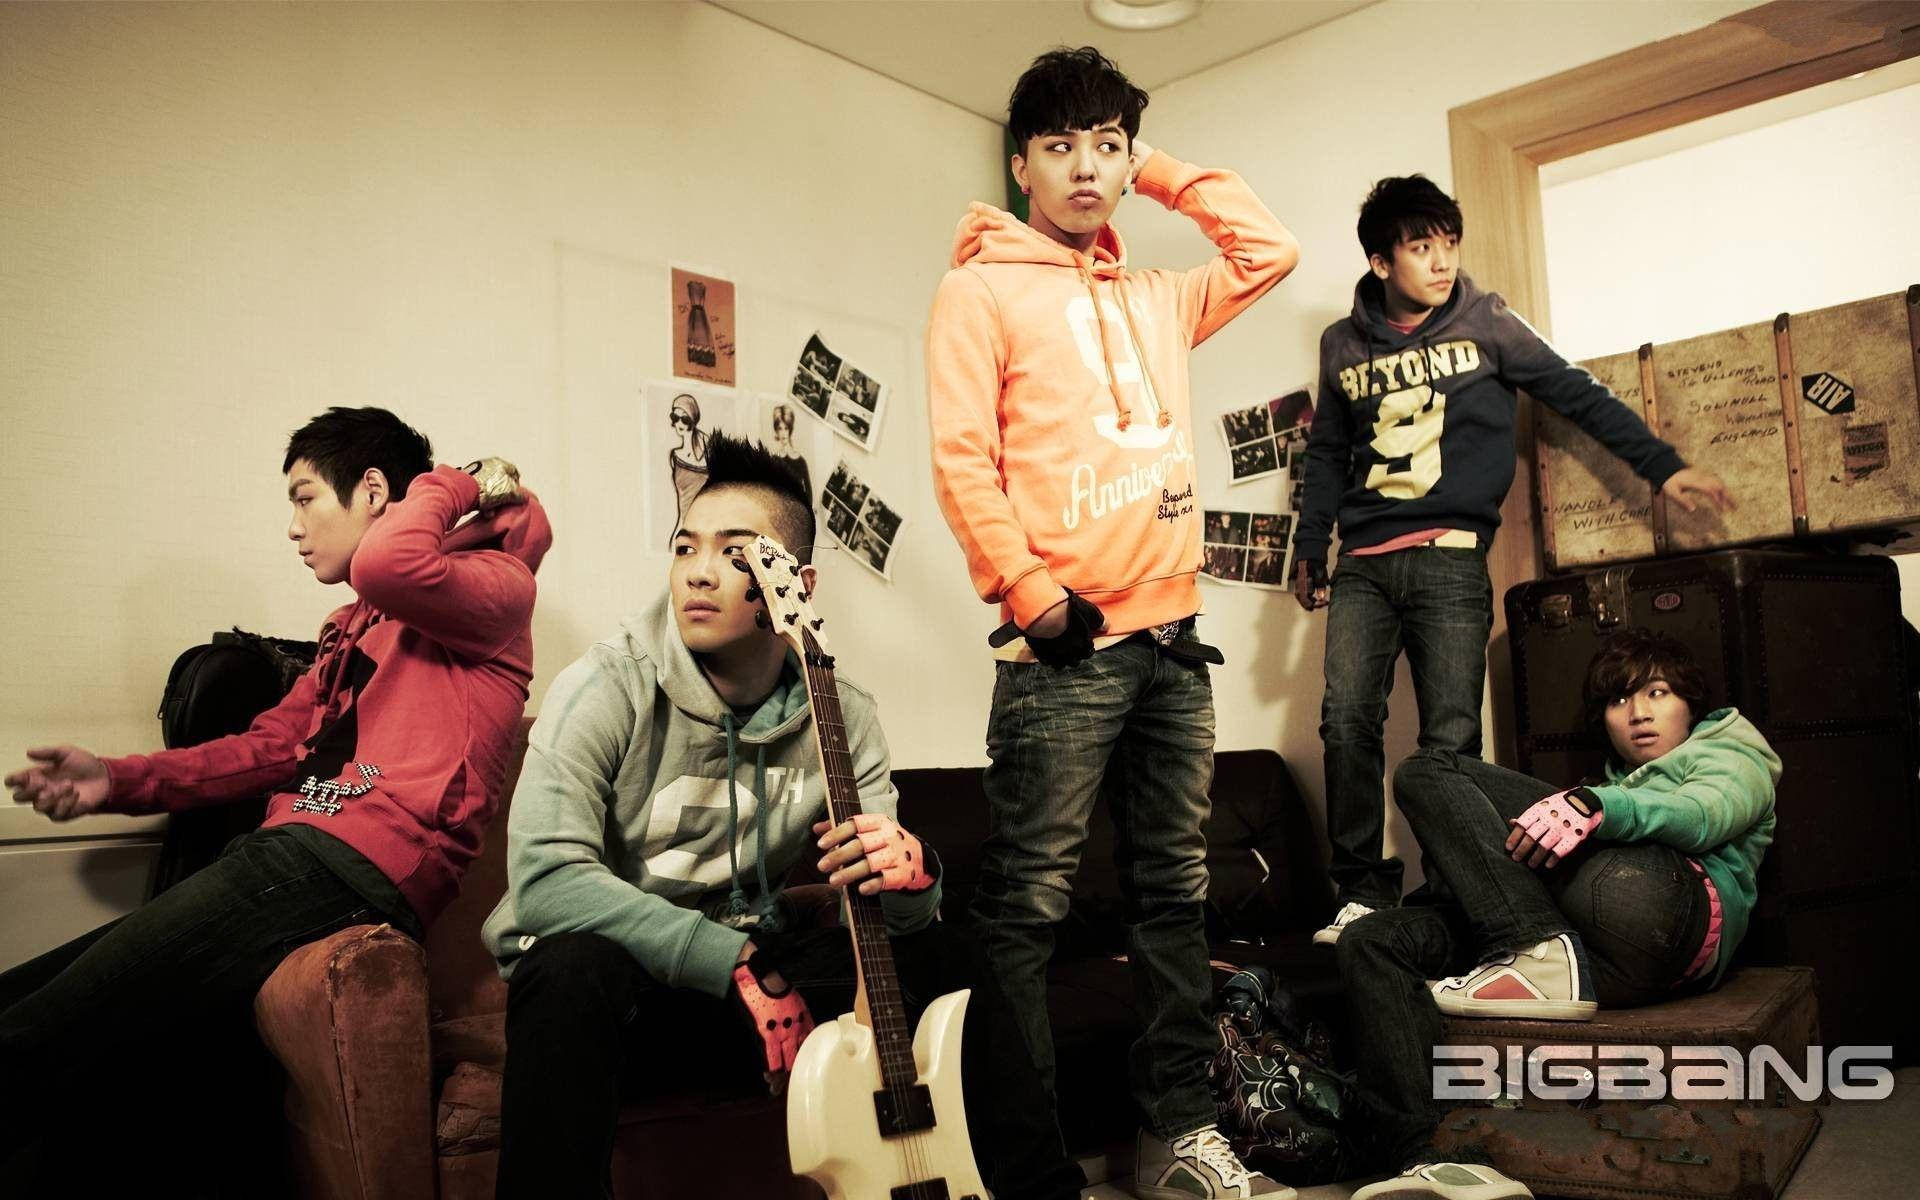 Bigbang Boy Band Poster Background